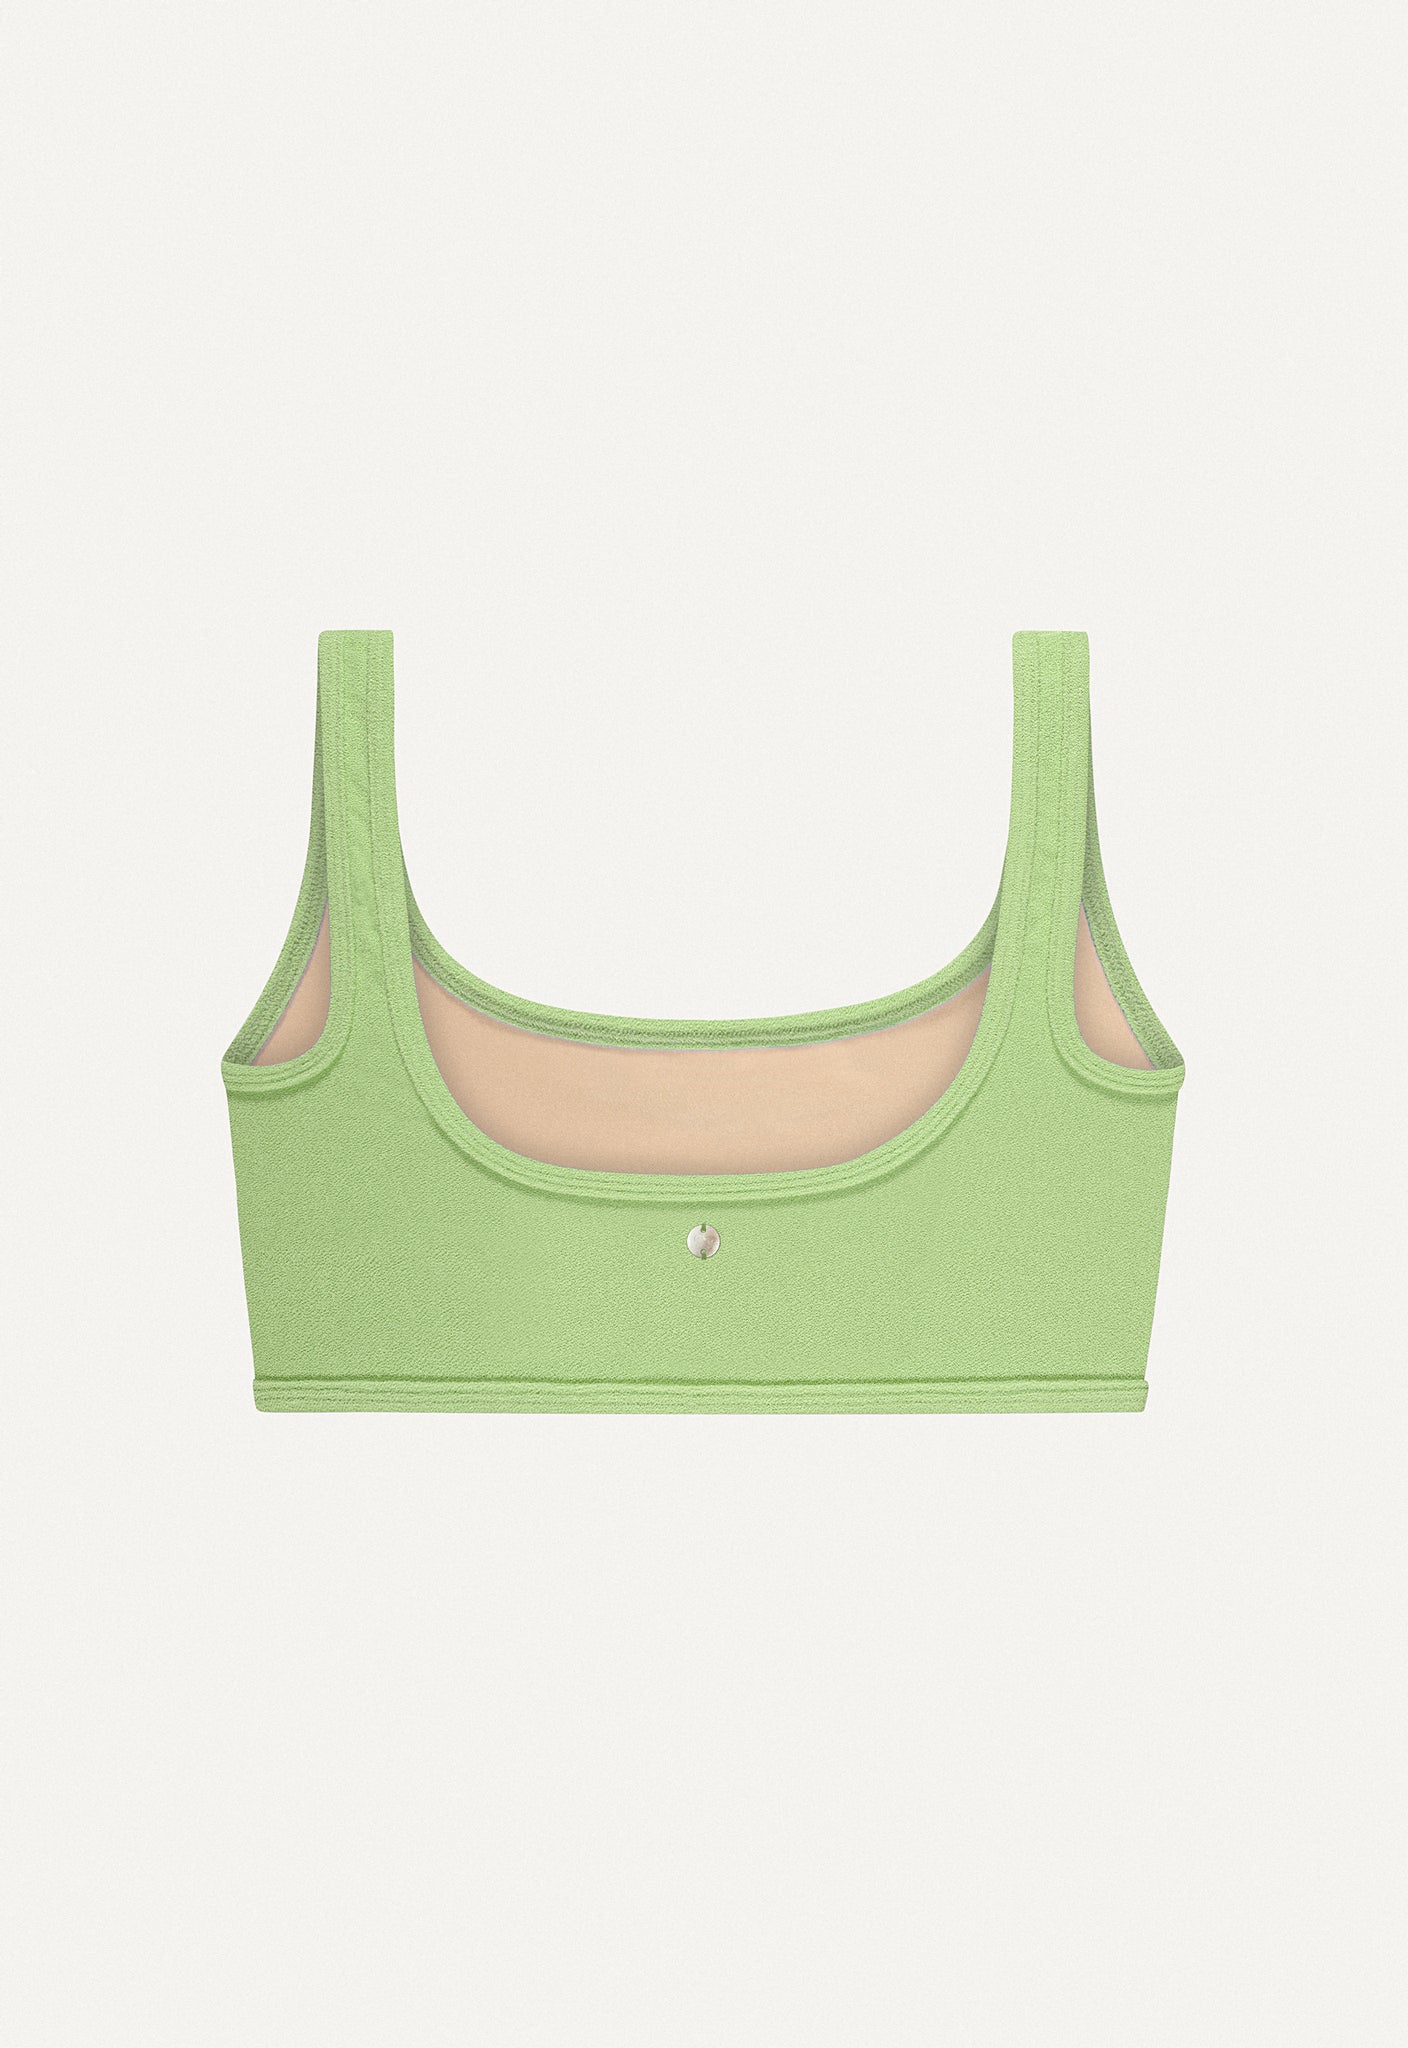 Bikini Top “Vento” in linden green terry